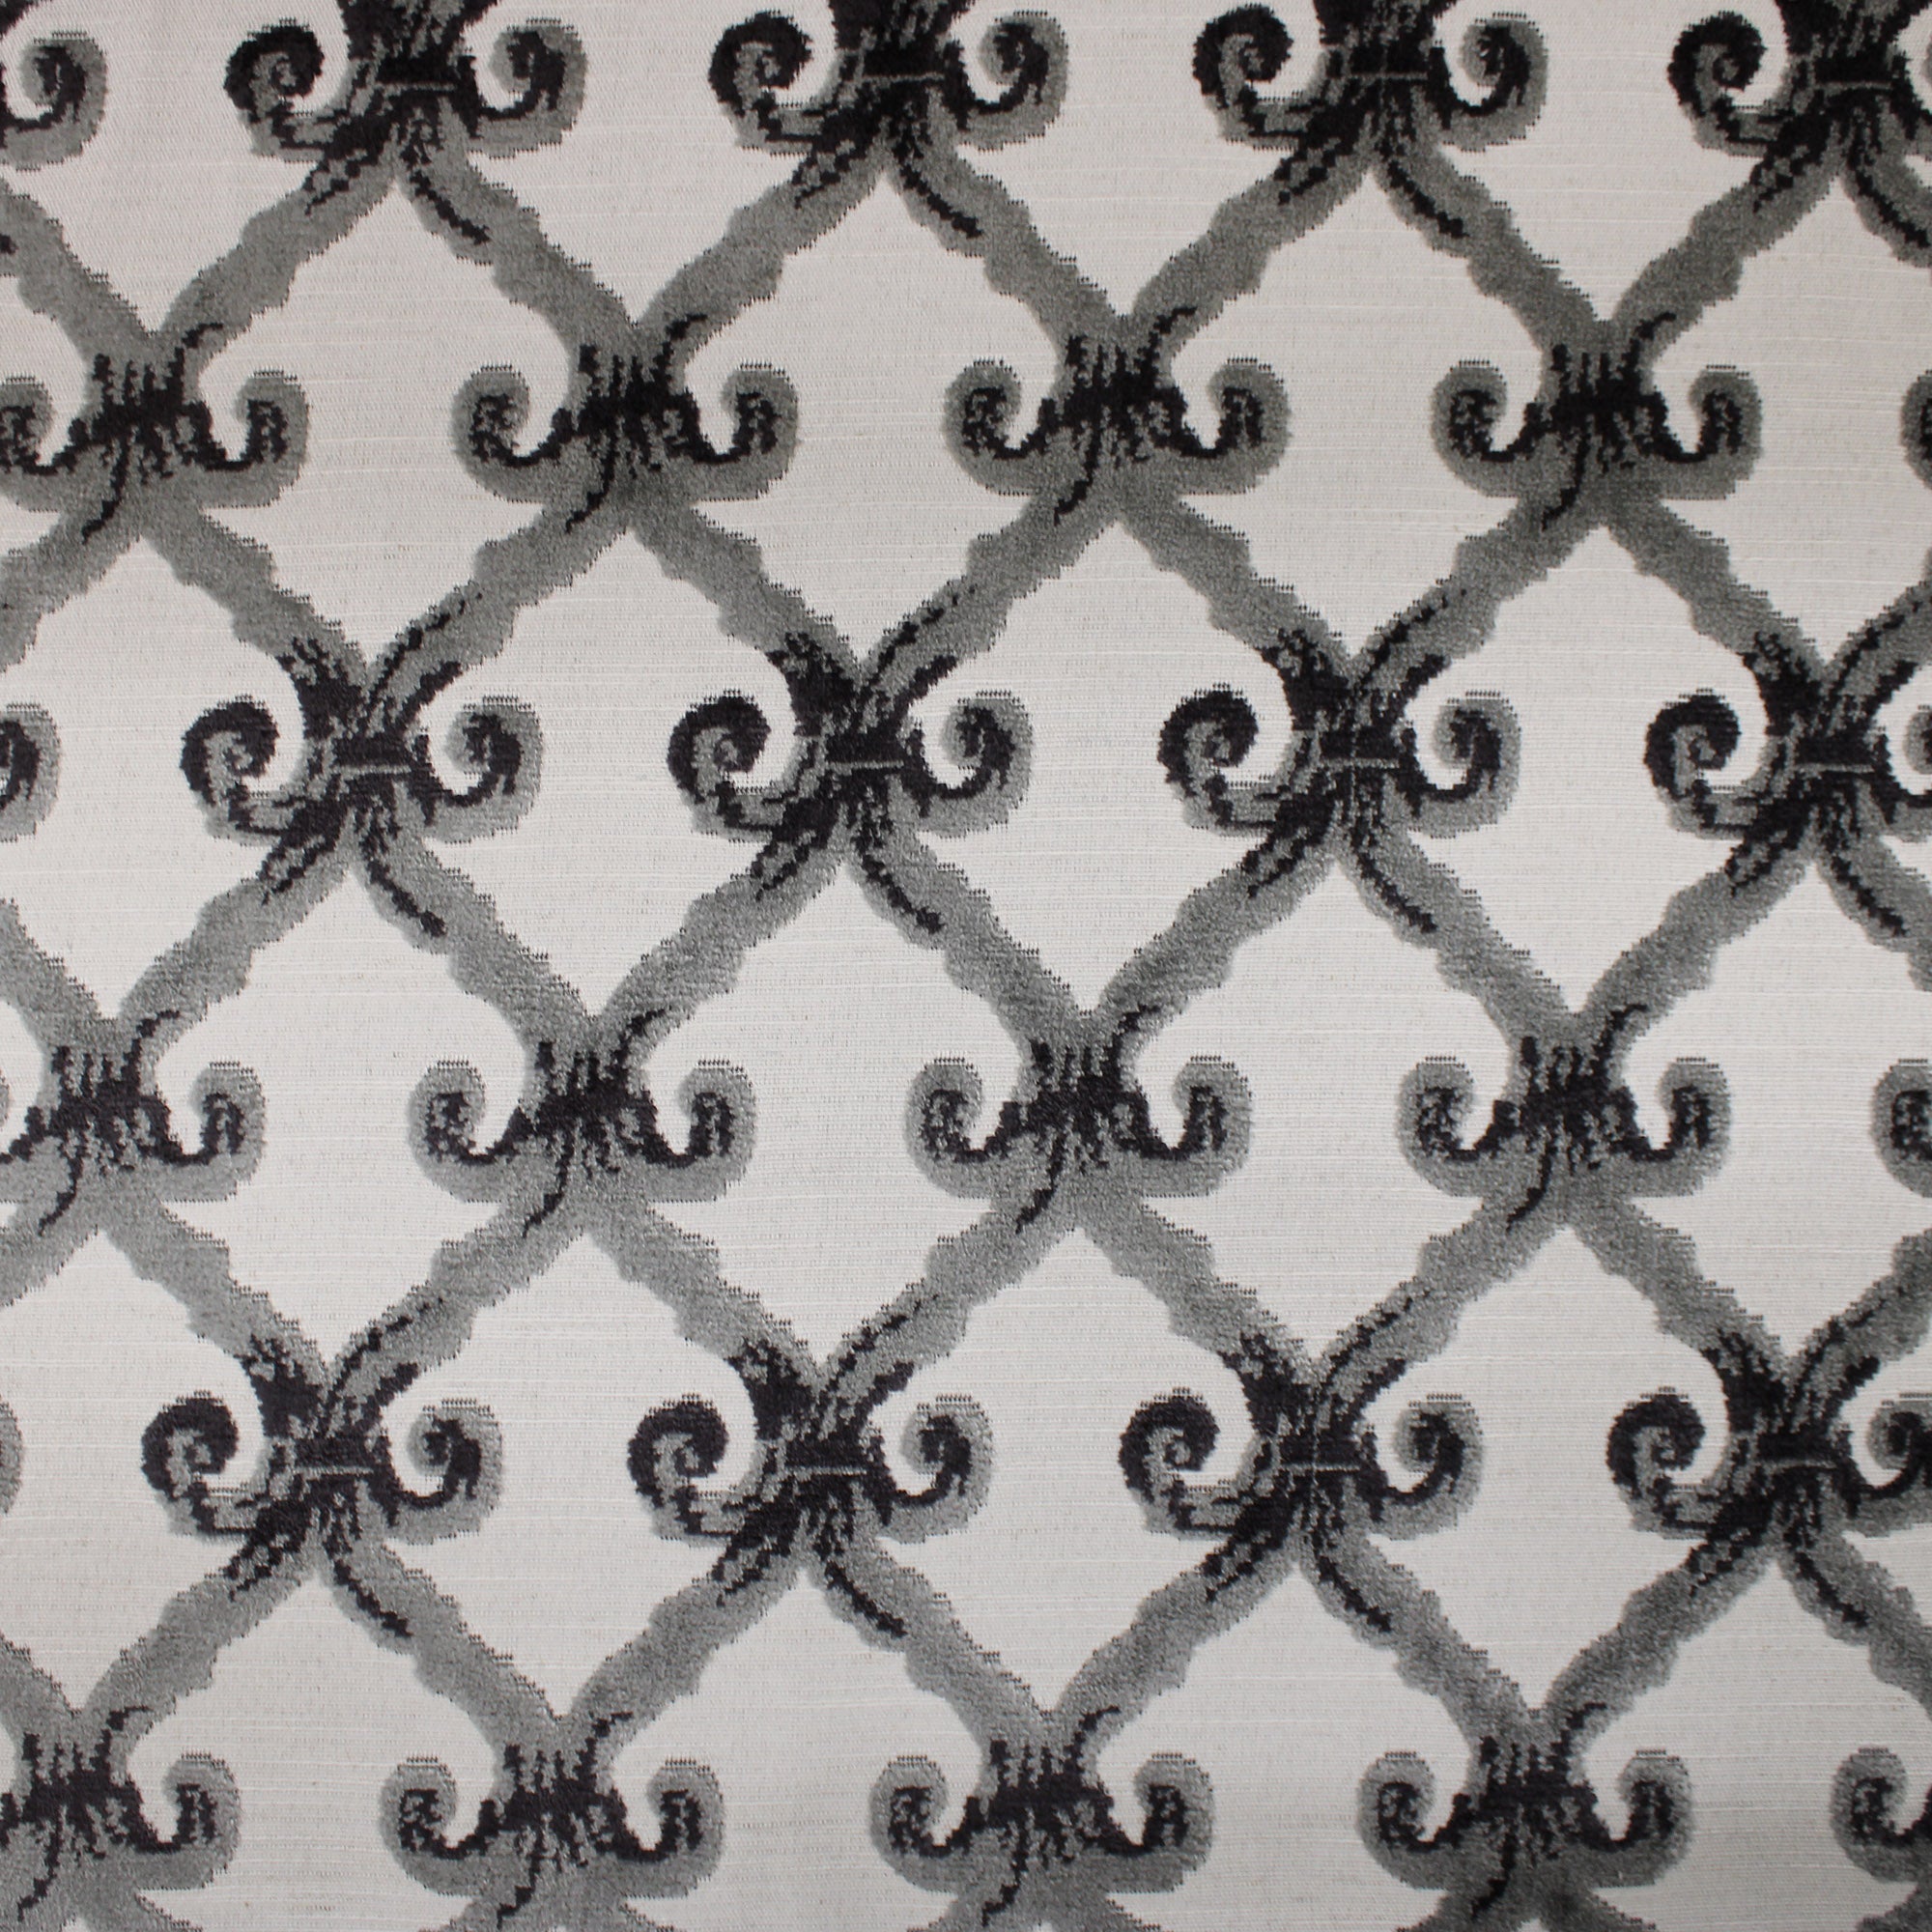 Barlet Fabric | Traditional Cut Velvet on Linen Look